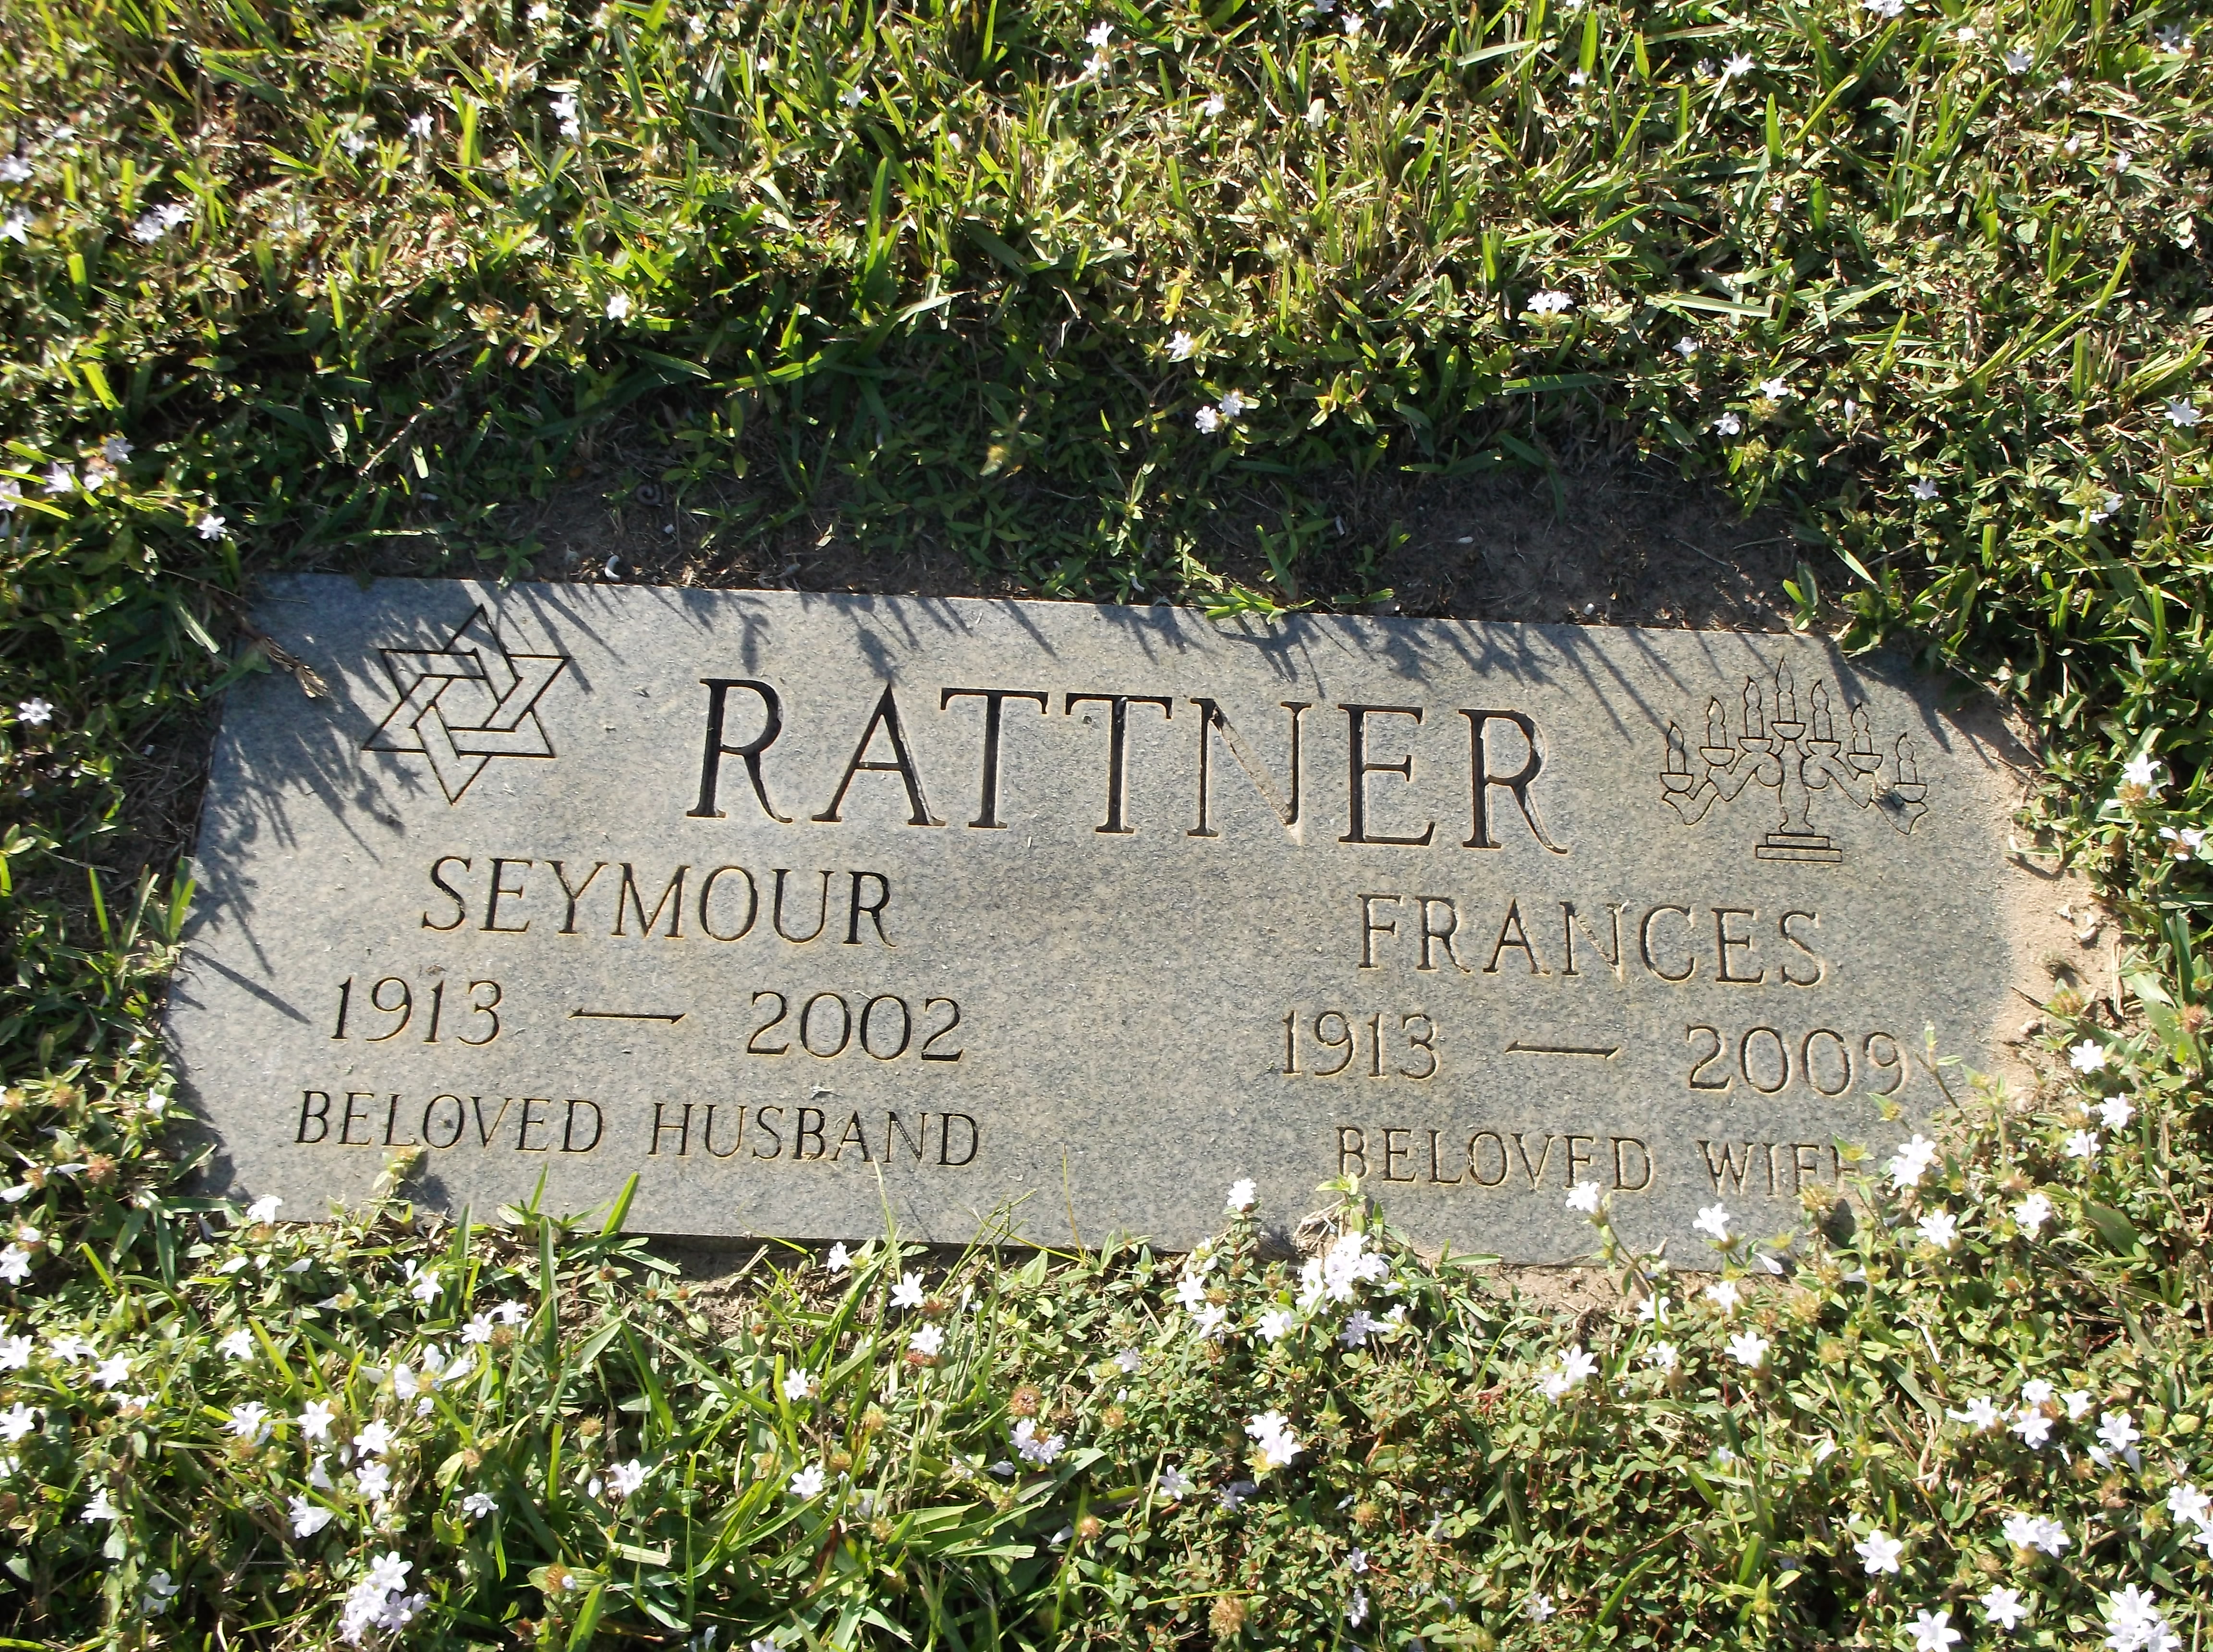 Seymour Rattner